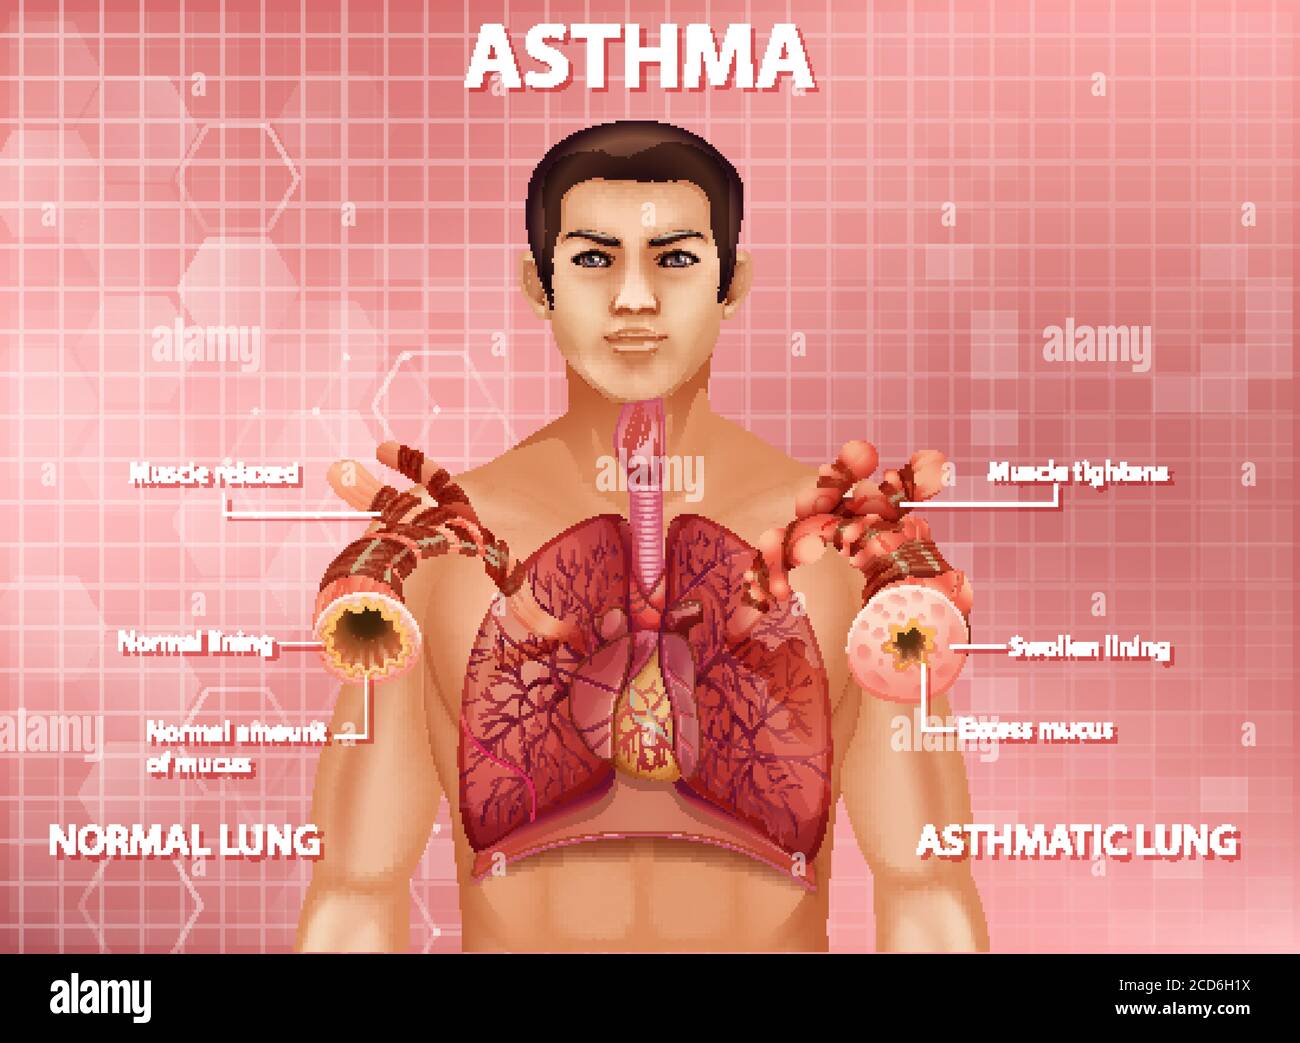 Human anatomy asthma diagram illustration Stock Vector